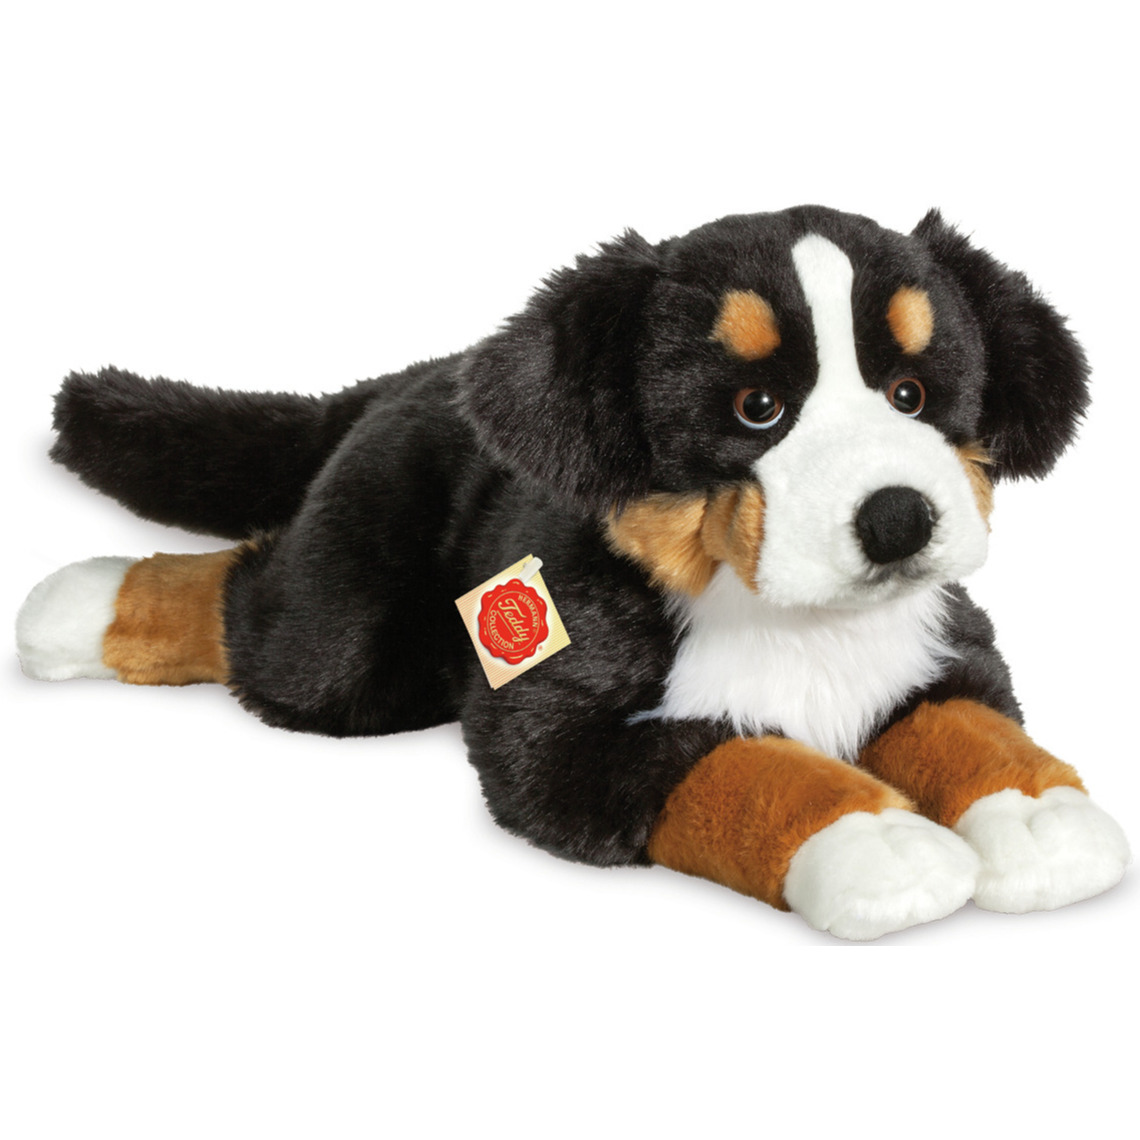 Knuffeldier hond Berner Sennen zachte pluche stof premium knuffels multi kleuren 60 cm